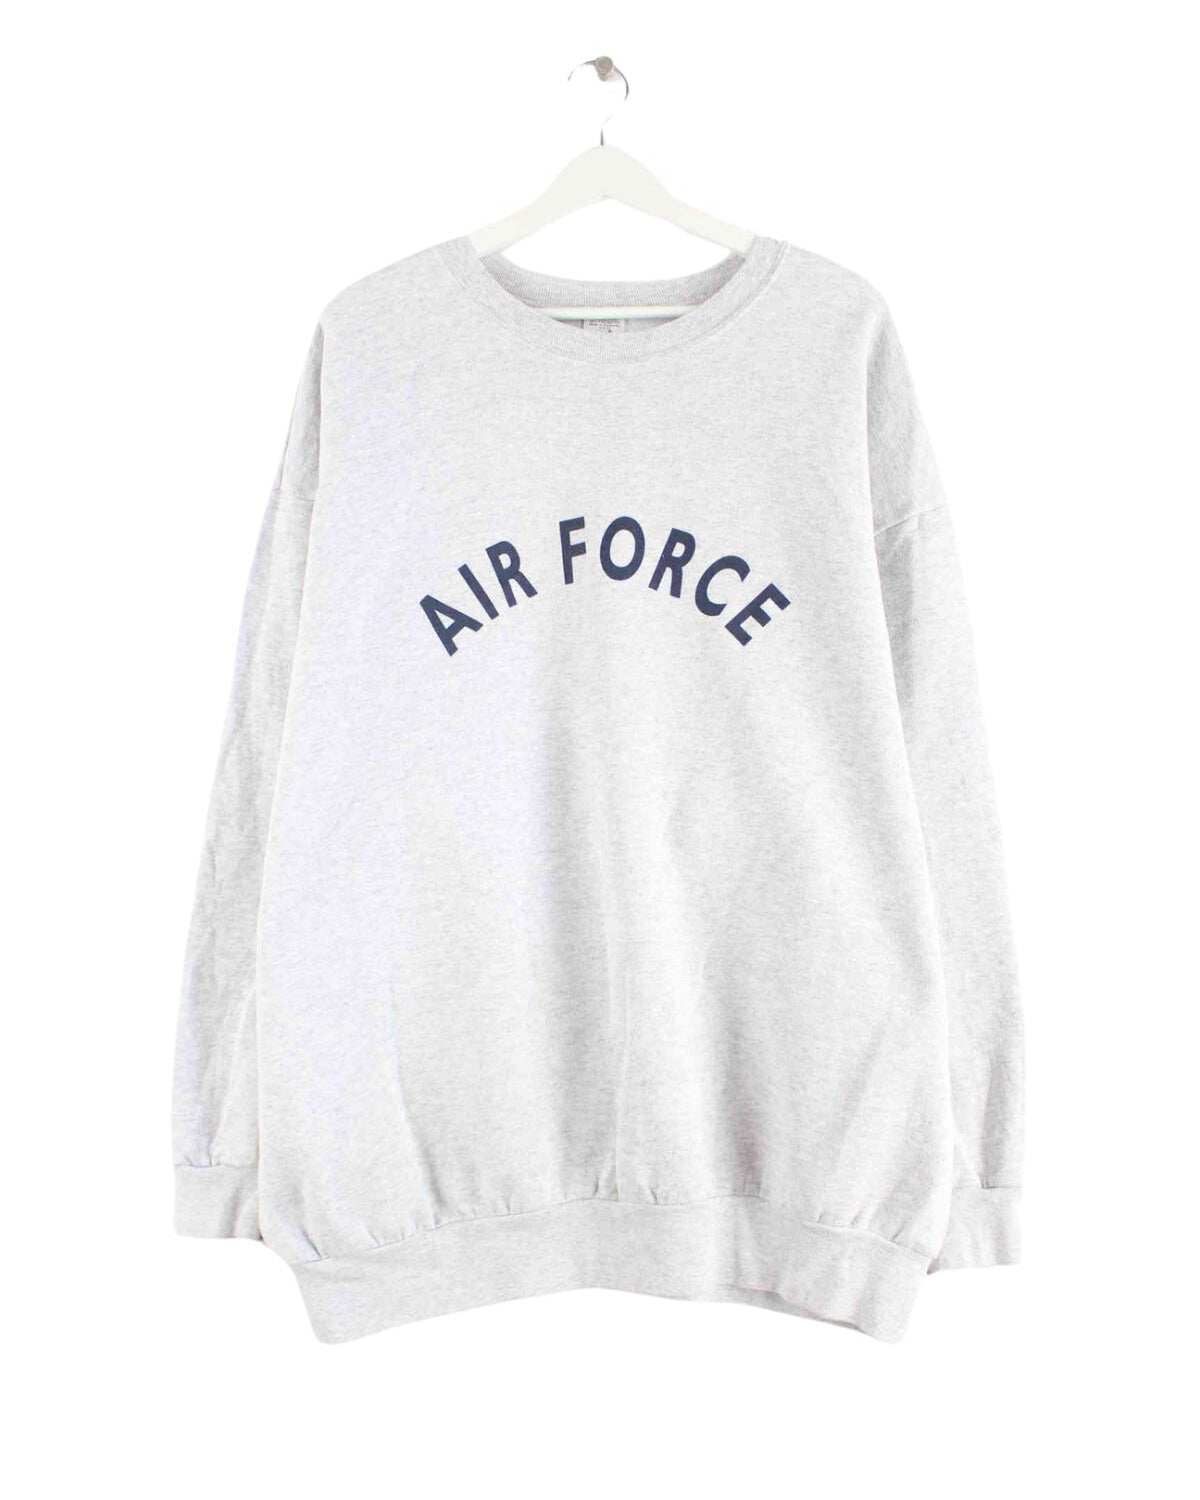 Vintage Airforce Print Sweater Grau XL (front image)